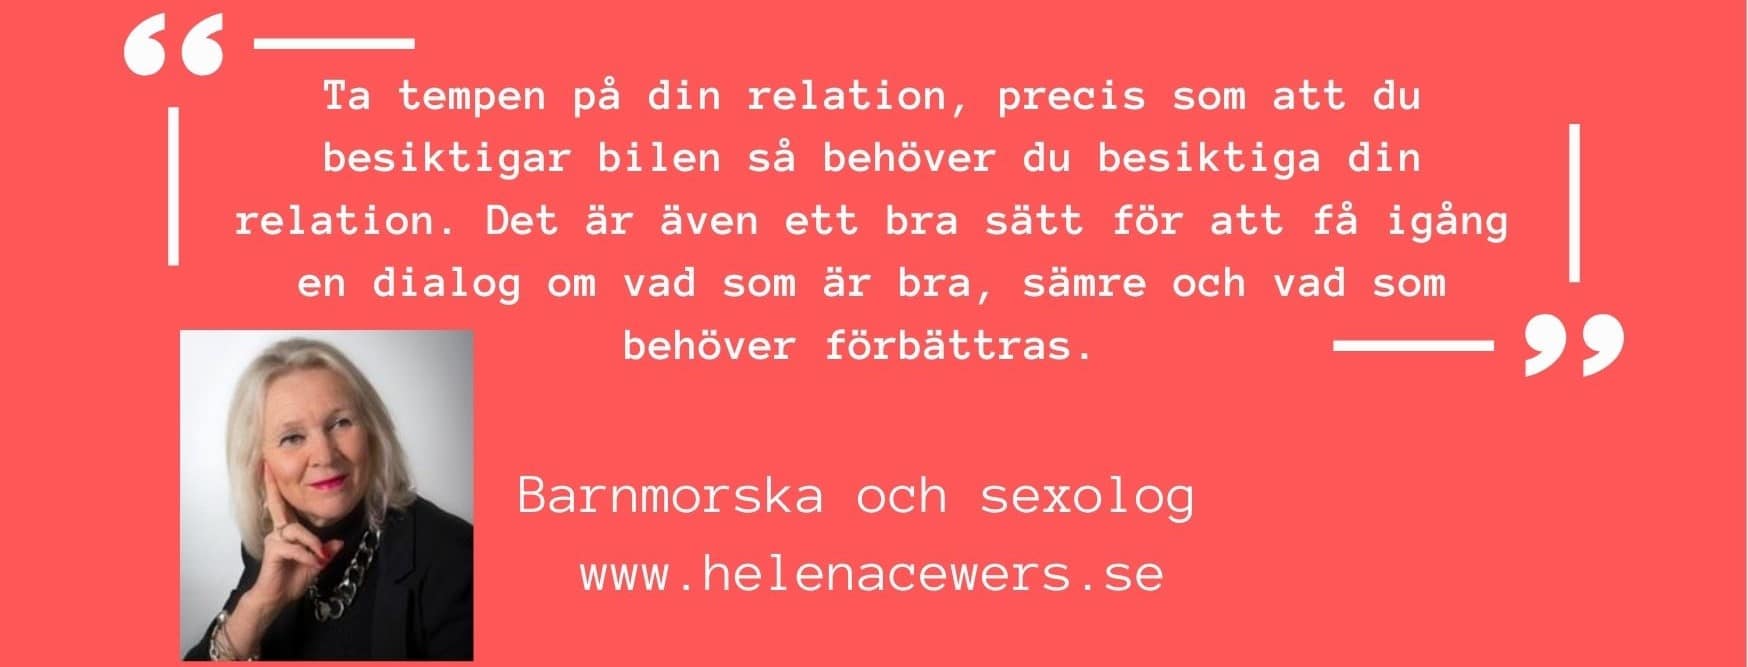 Helena Cewers sexolog